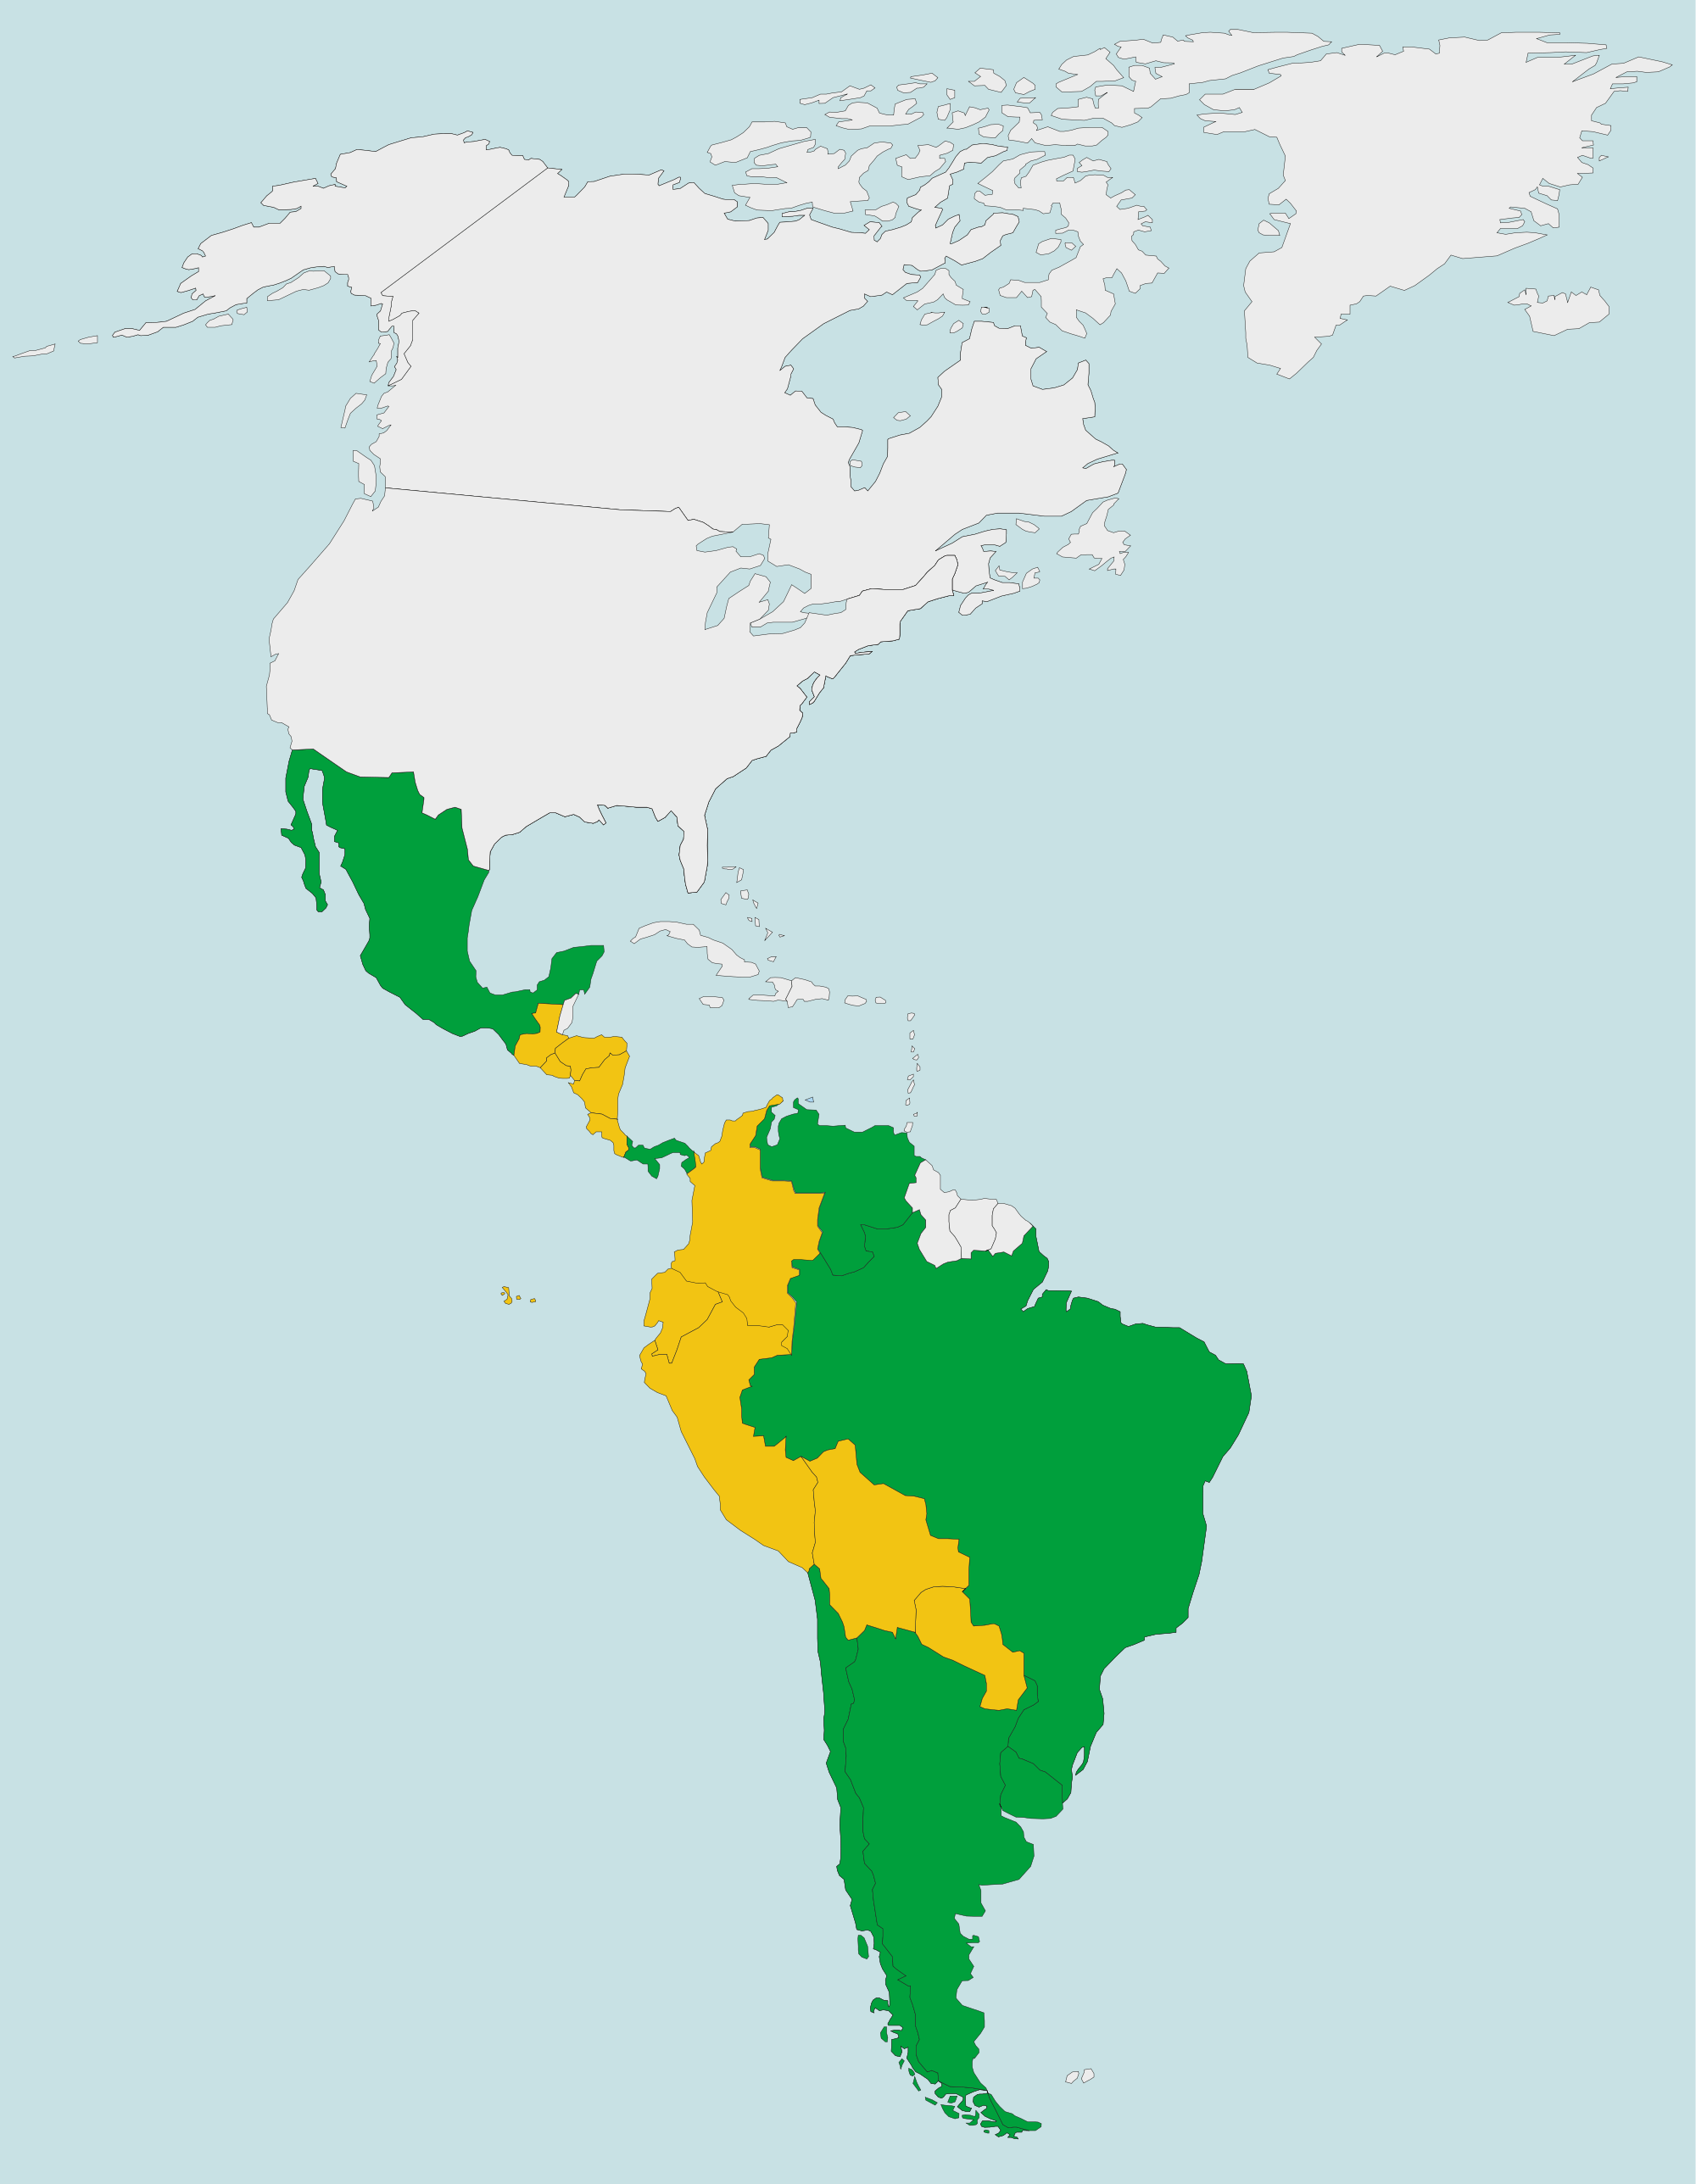 Latin America Countries Telegraph